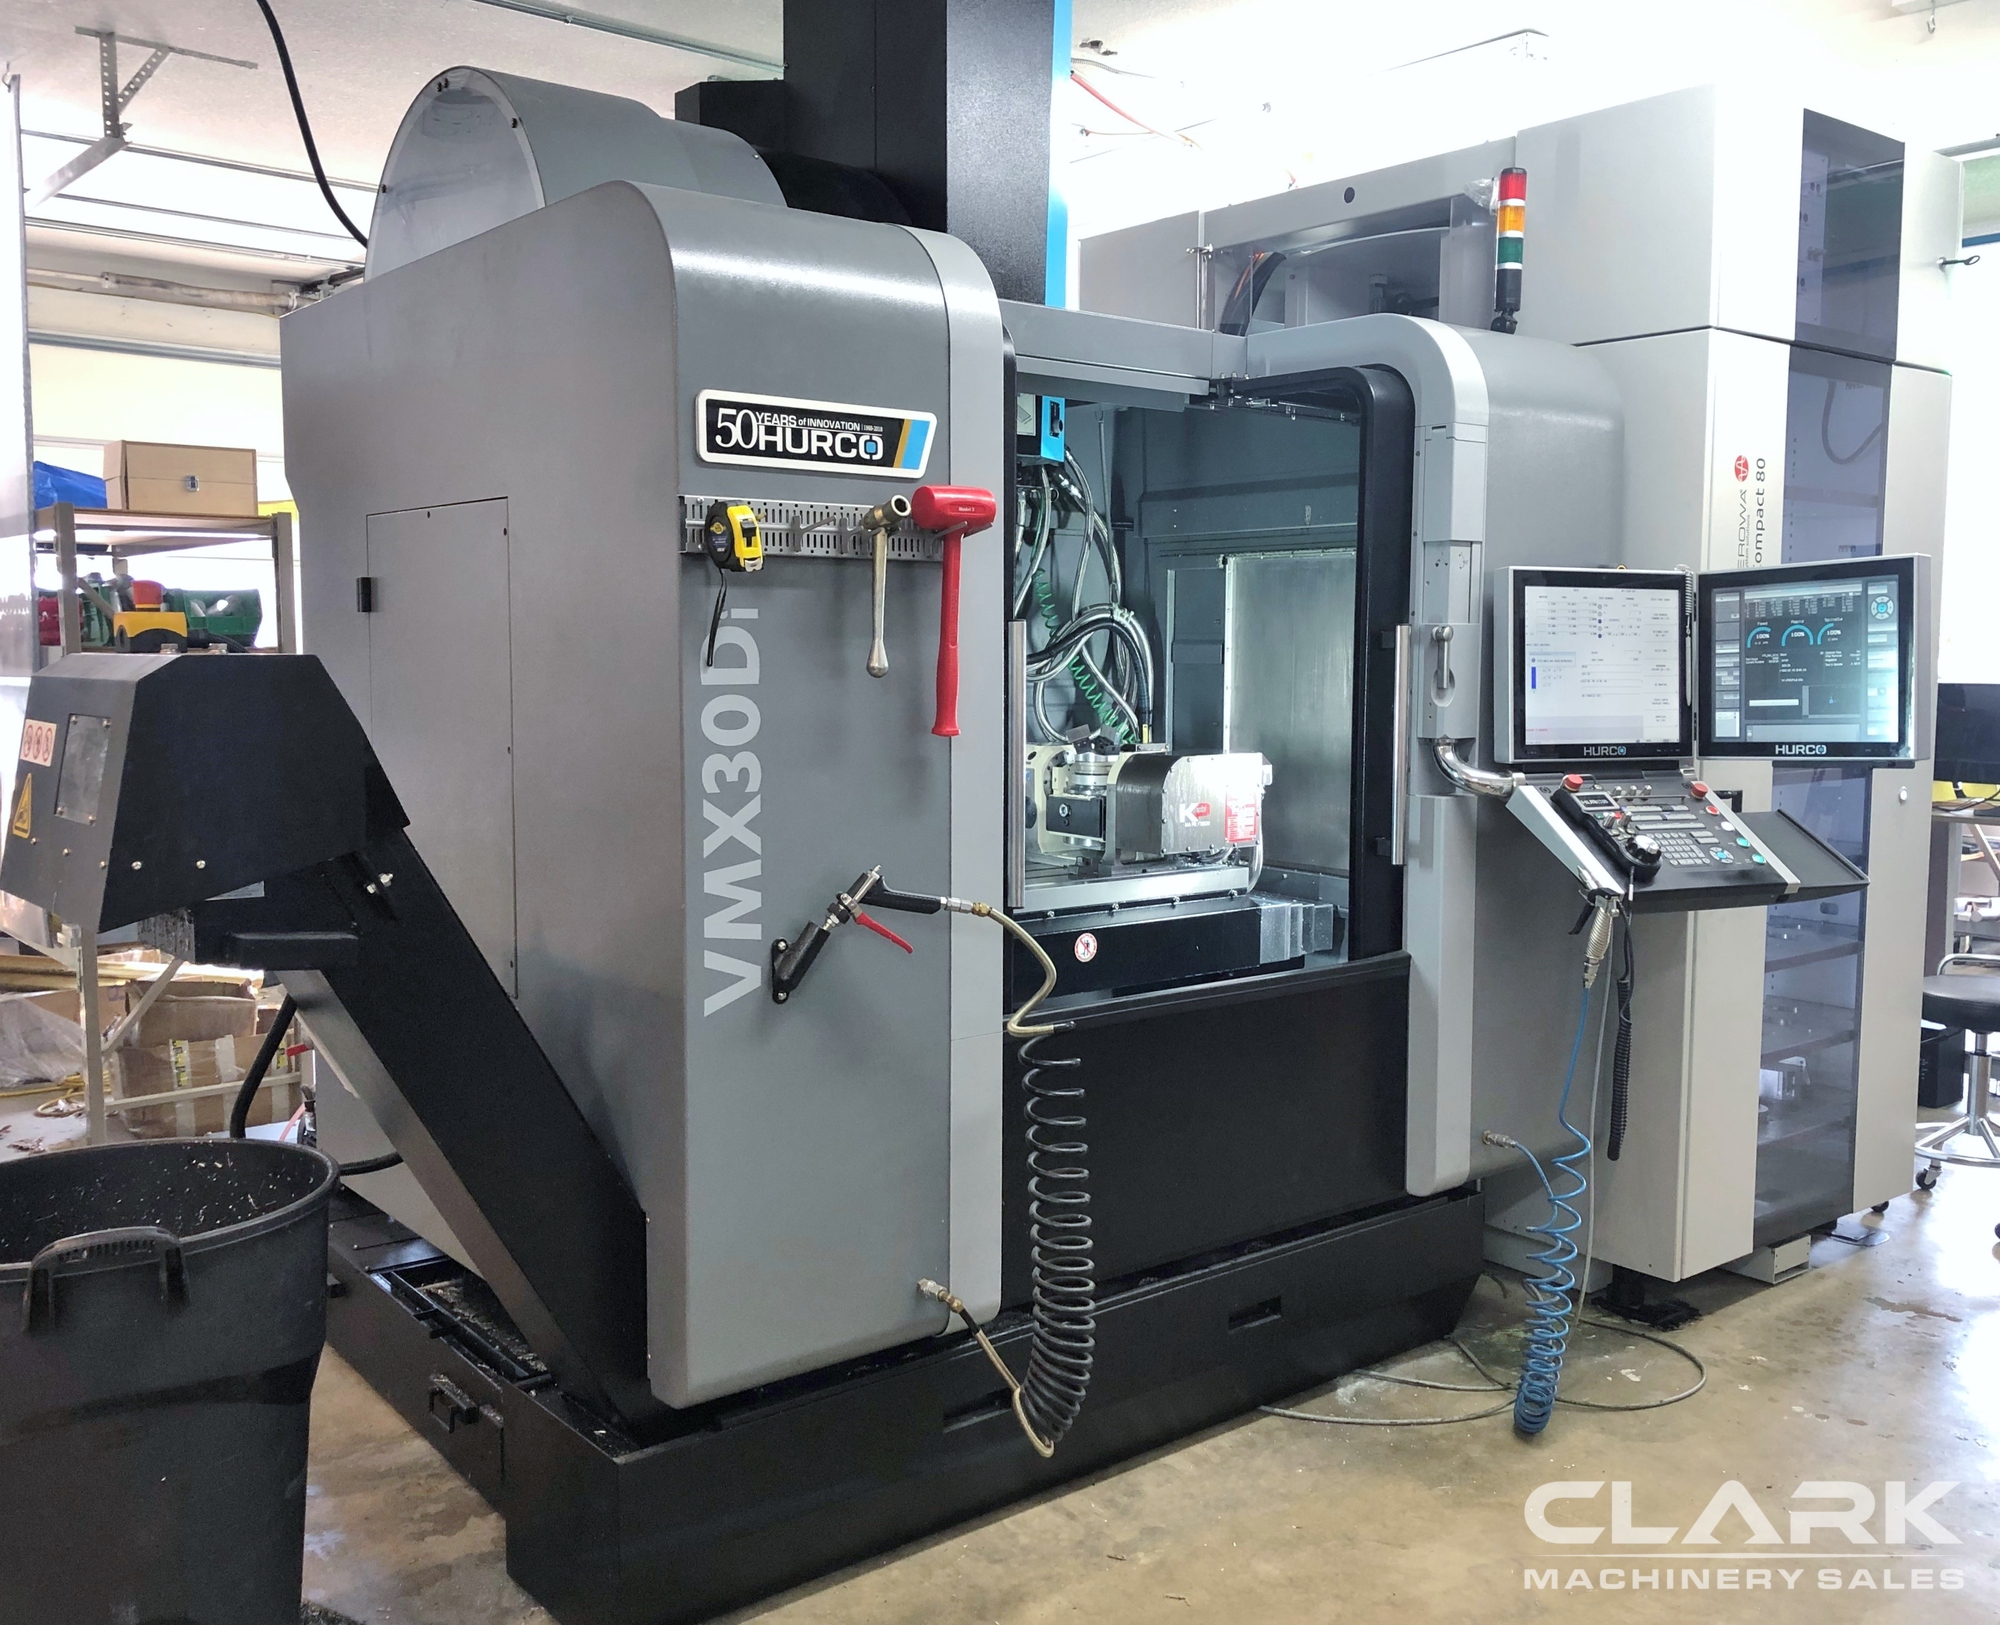 2018 HURCO VMX30DI Vertical Machining Centers | Clark Machinery Sales, LLC